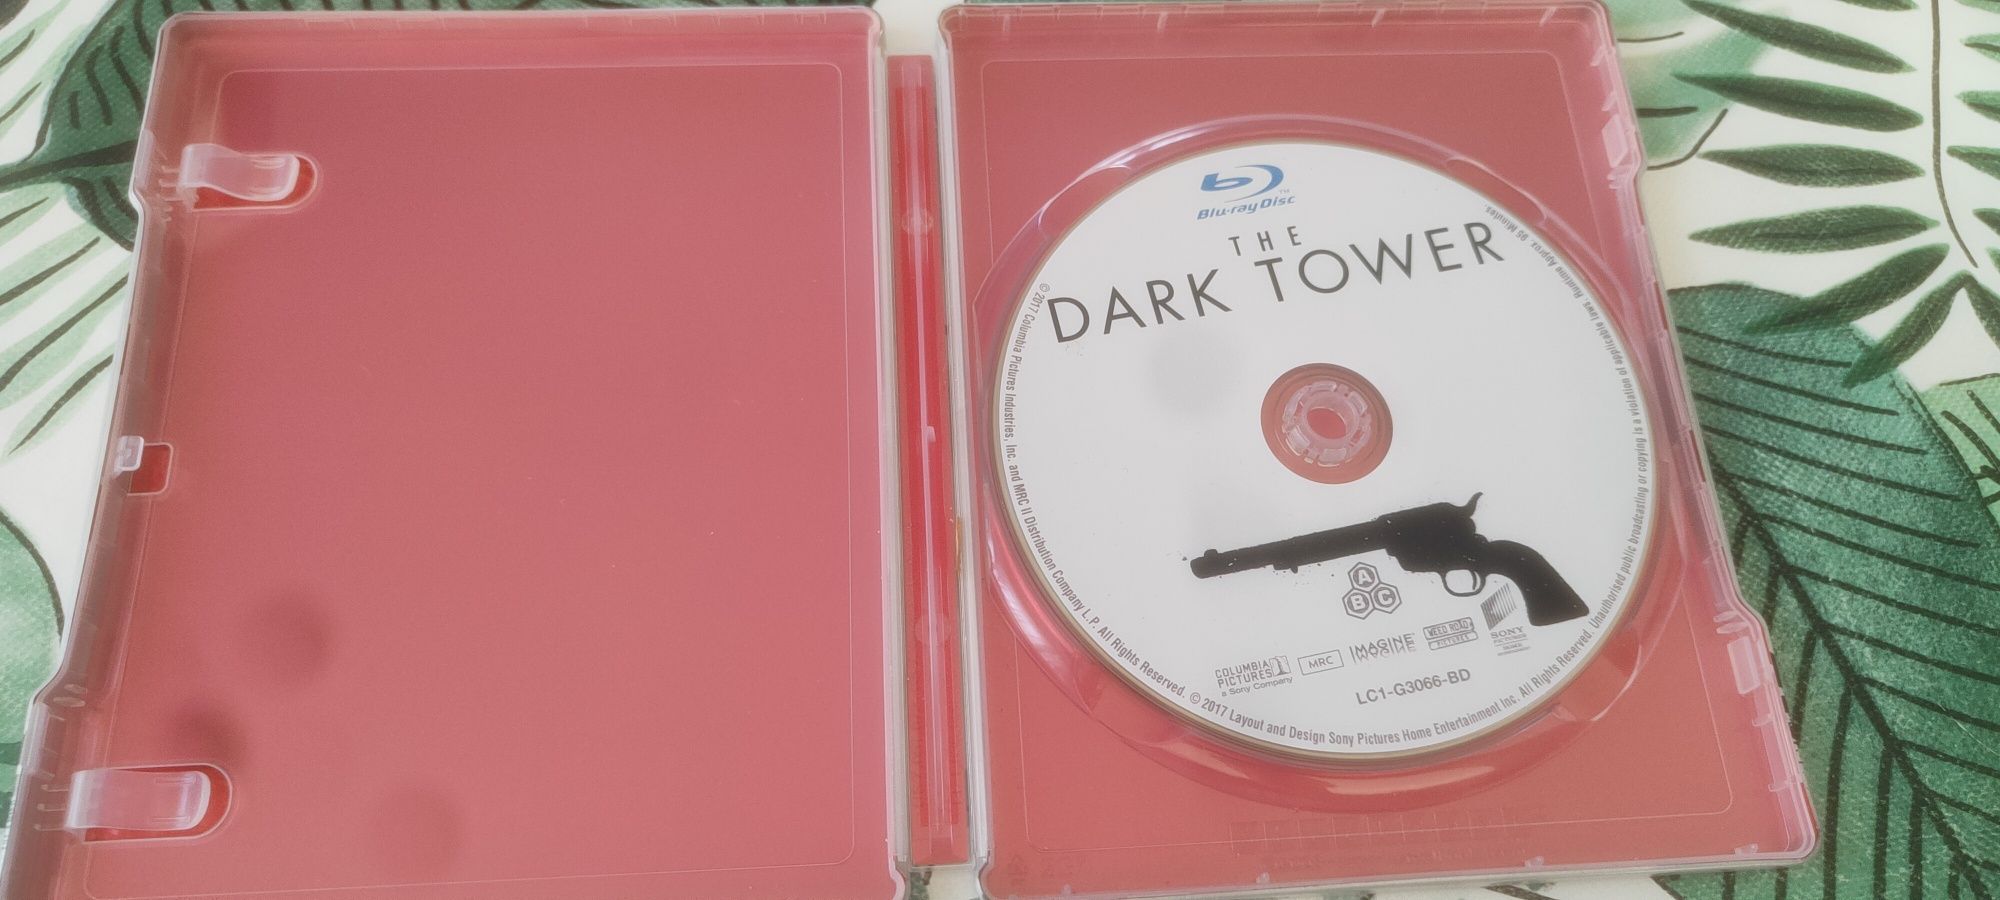 The dark tower. Blu-ray. Steelbox